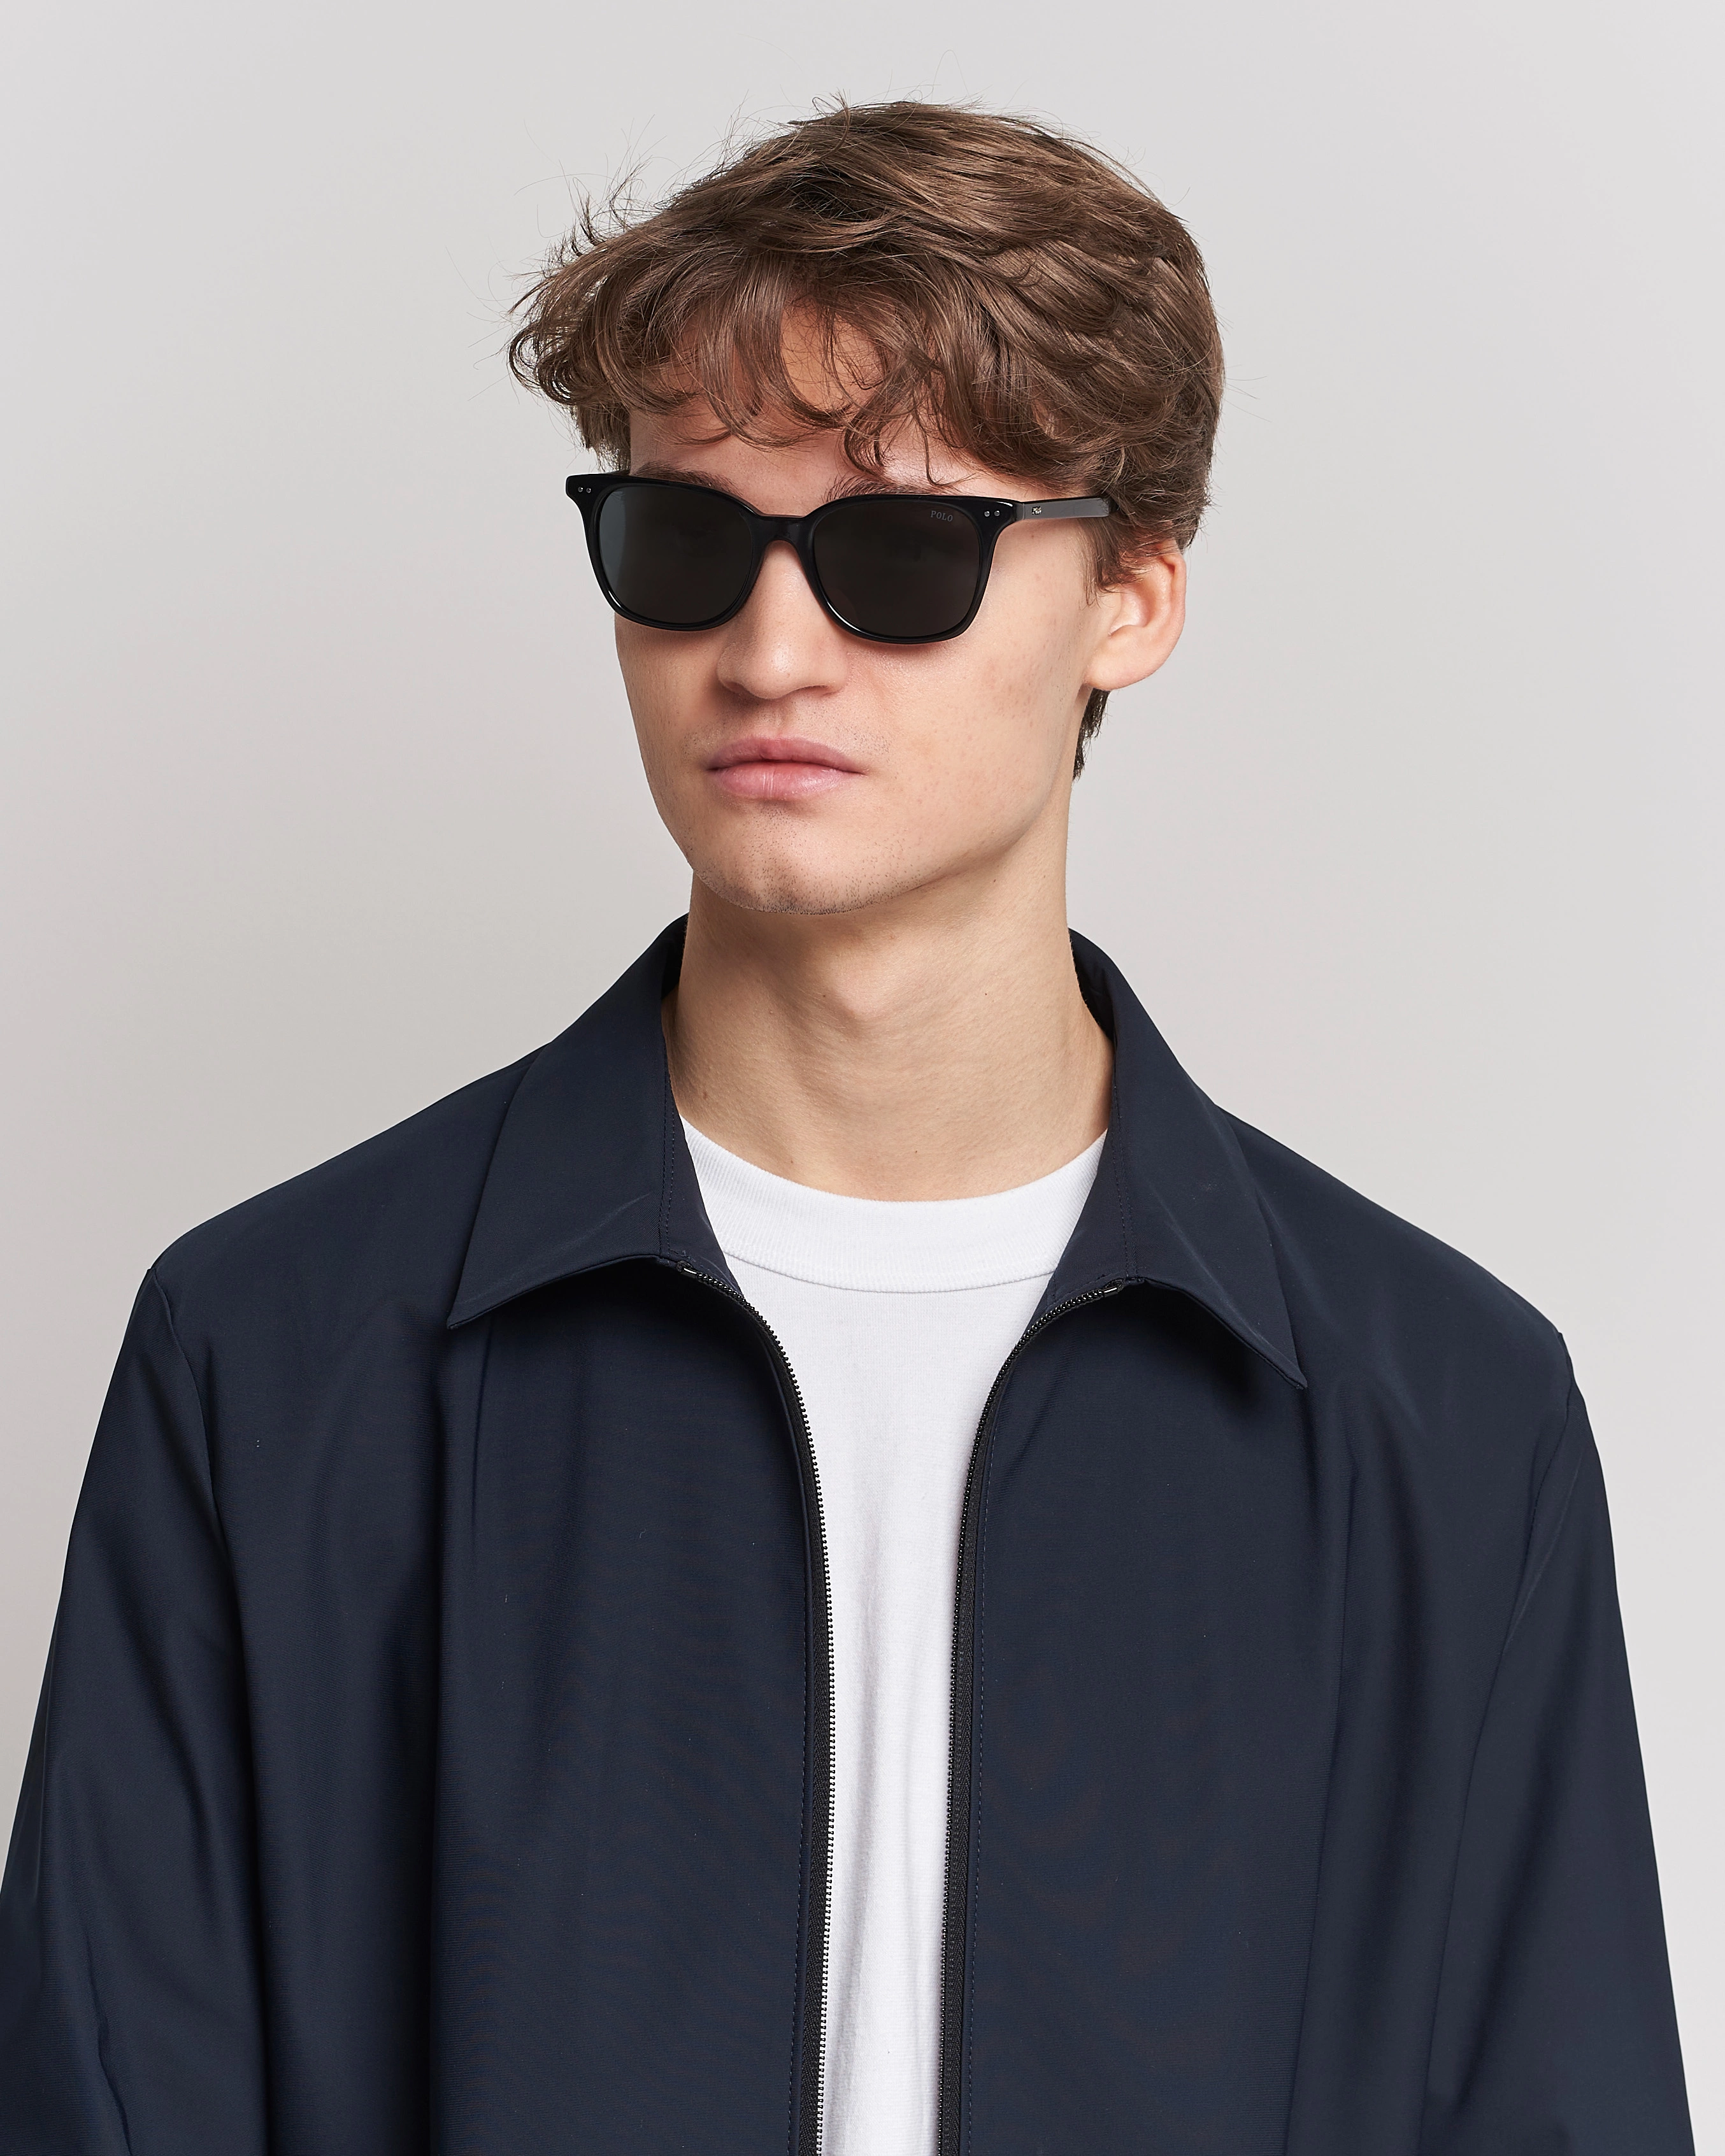 Mies | Polo Ralph Lauren | Polo Ralph Lauren | 0PH4187 Sunglasses Shiny Black